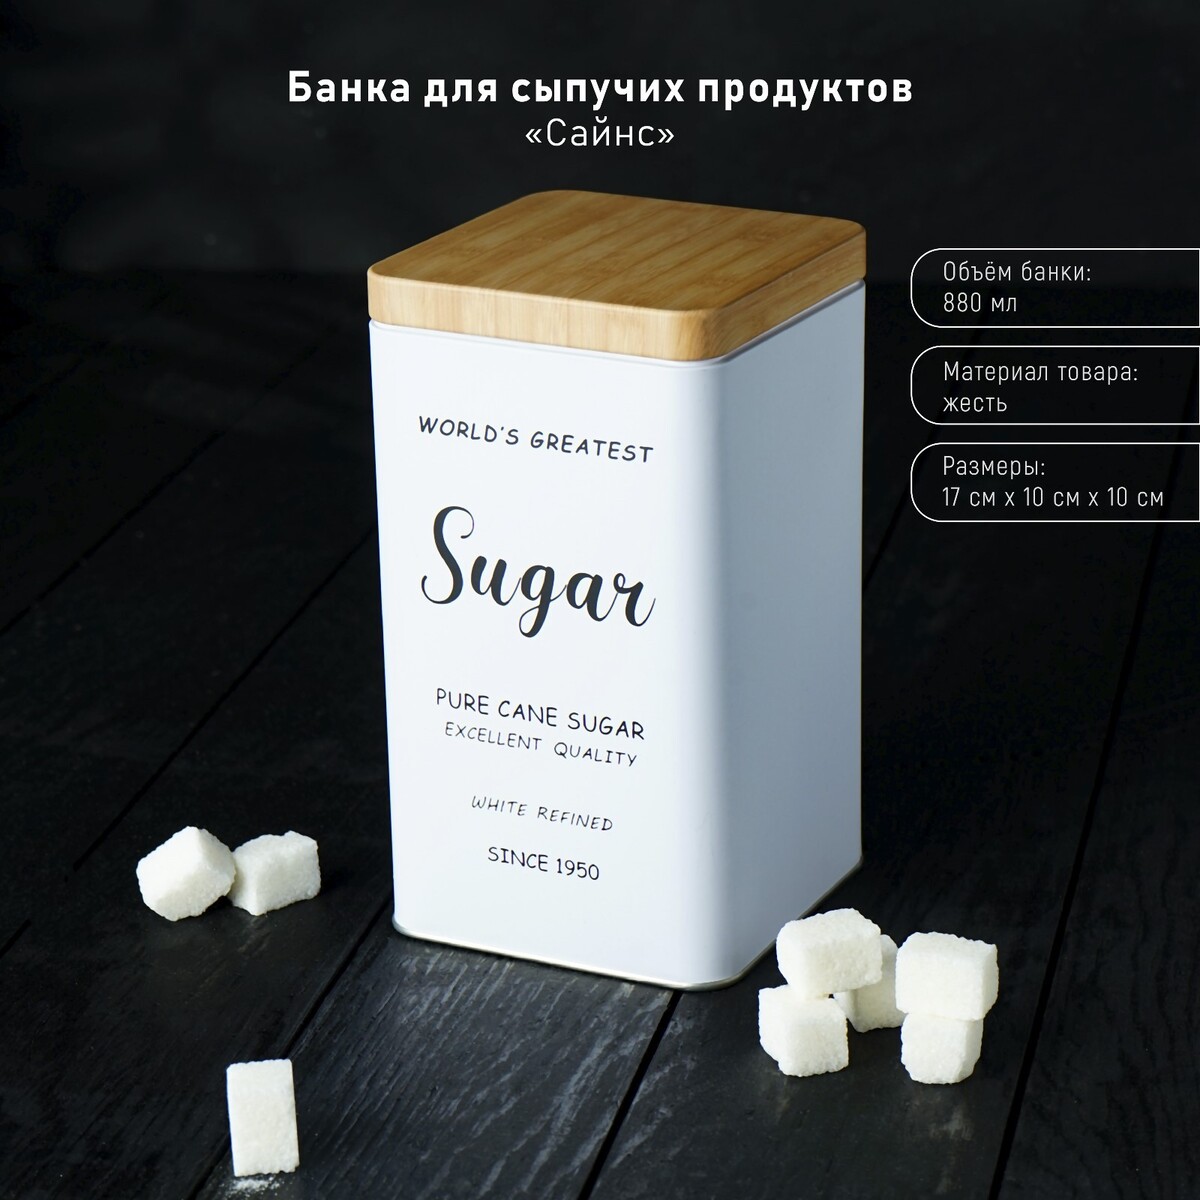 Банка для сыпучих продуктов (сахар) банка для сыпучих продуктов сахар